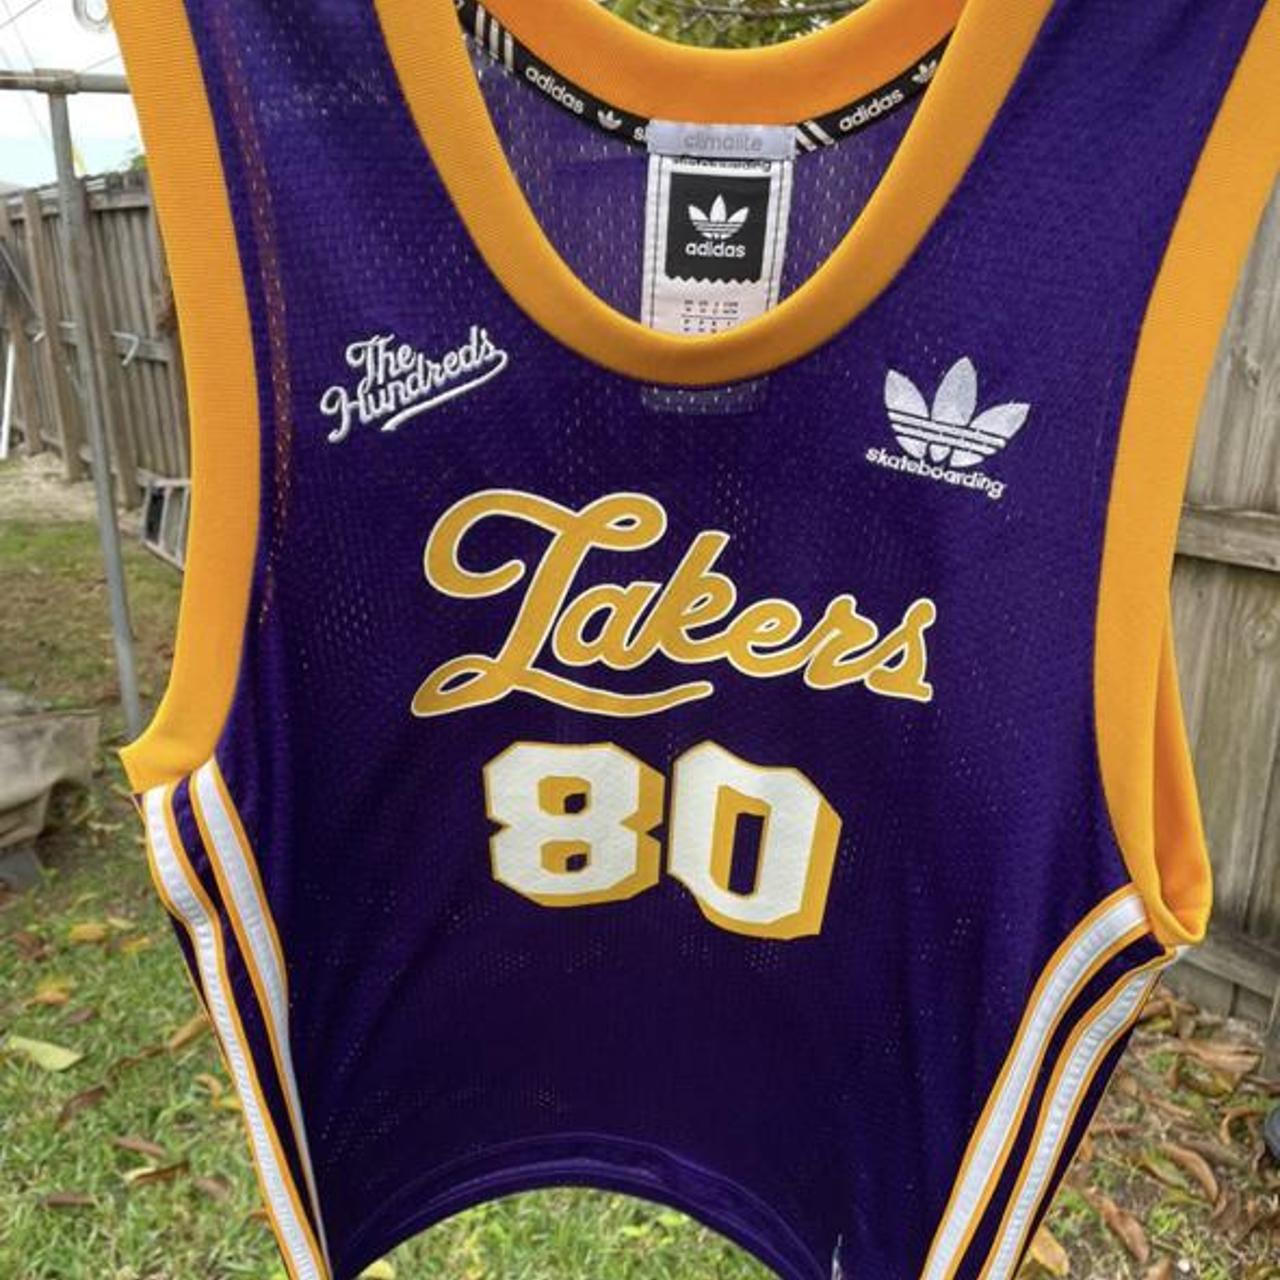 Adidas x Lakers T-Shirt – The Hundreds